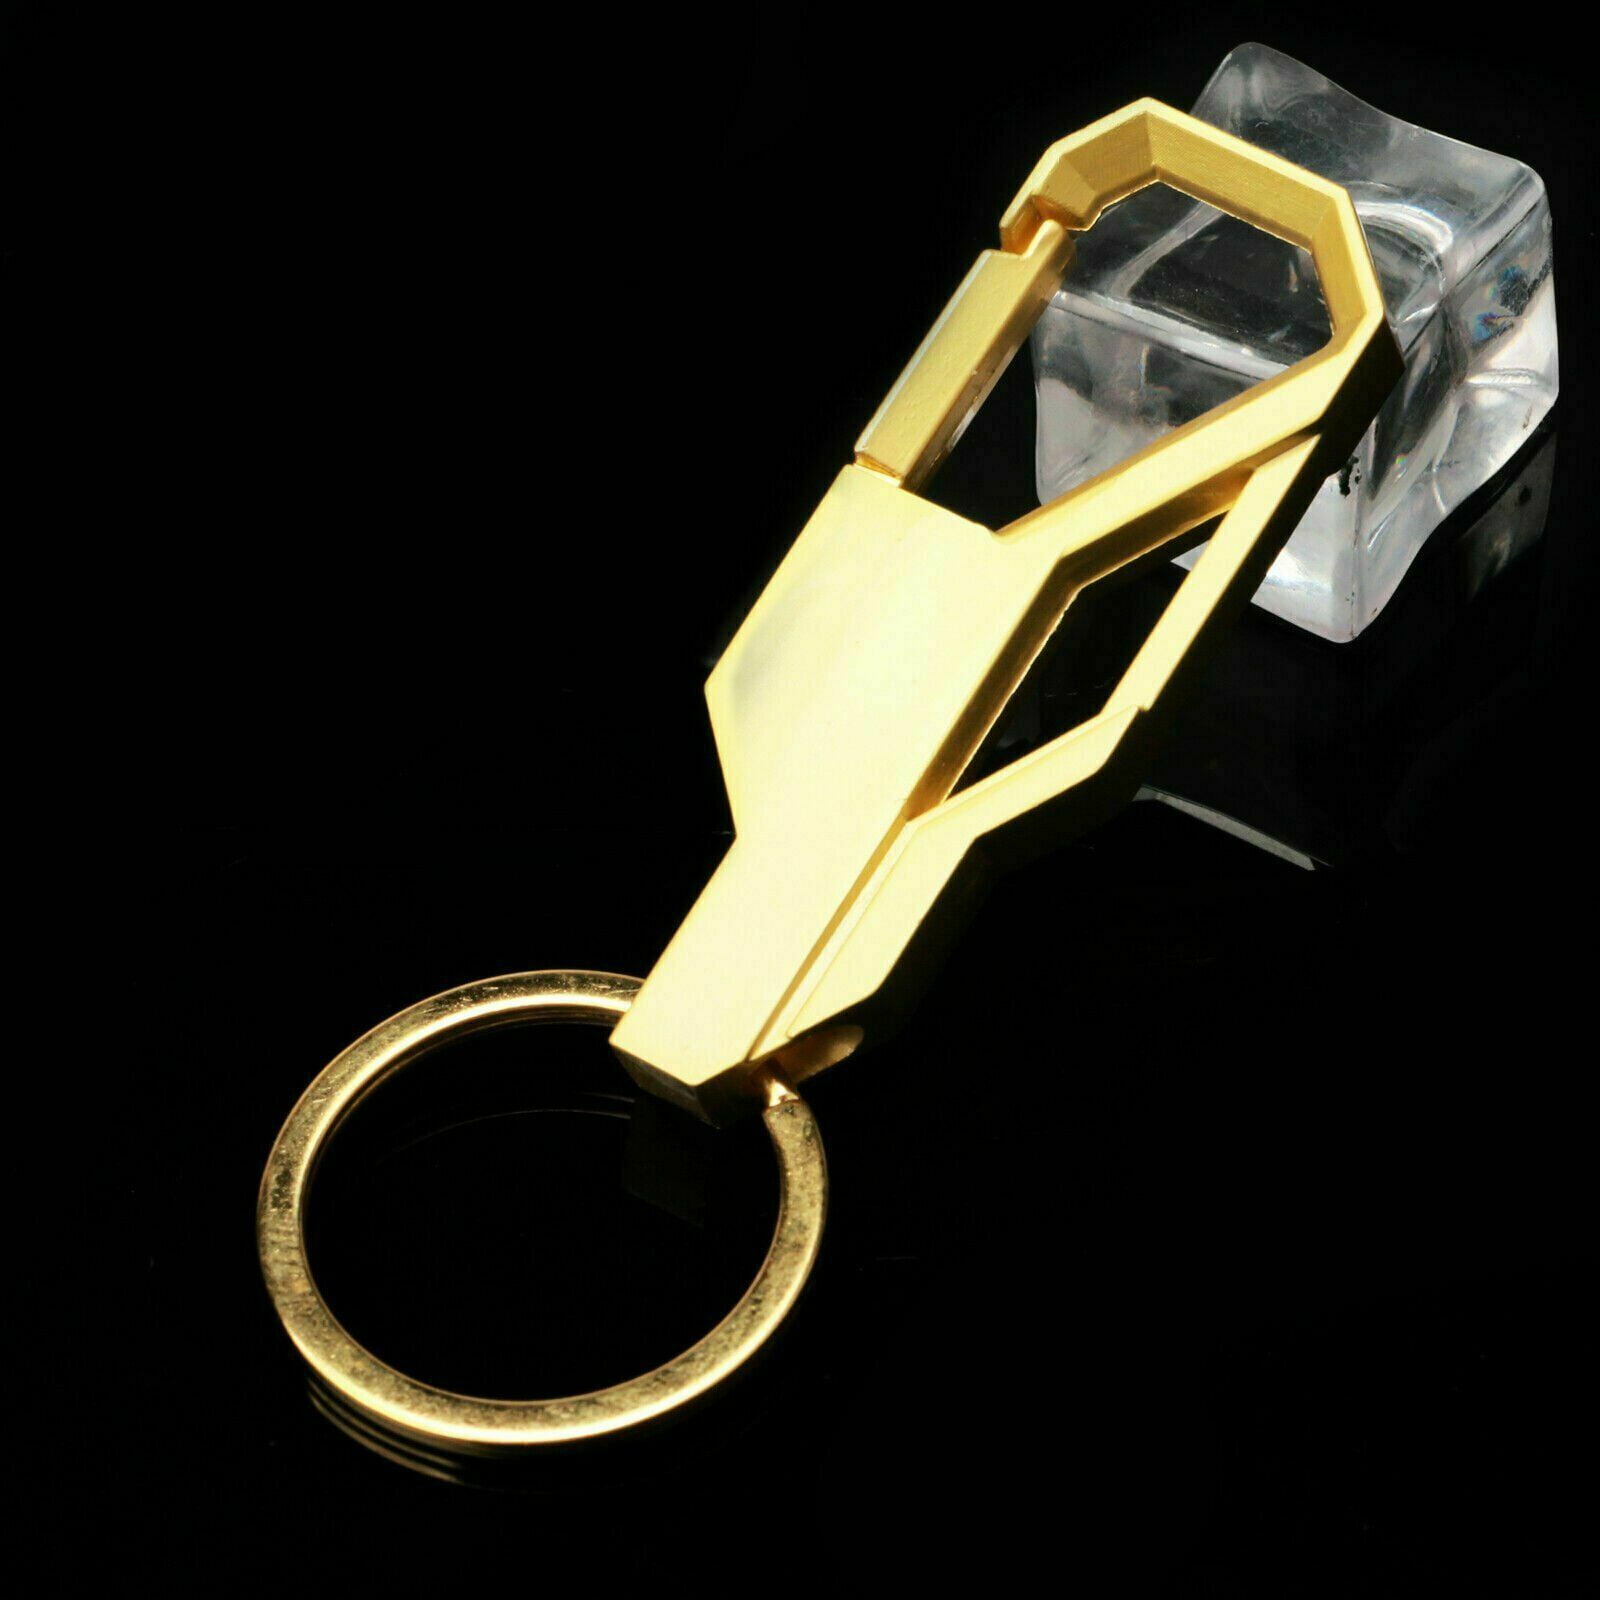 5PCS Fashion Men Creative Alloy Keyfob Car Keyring Keychain Key Chain Ring Gift